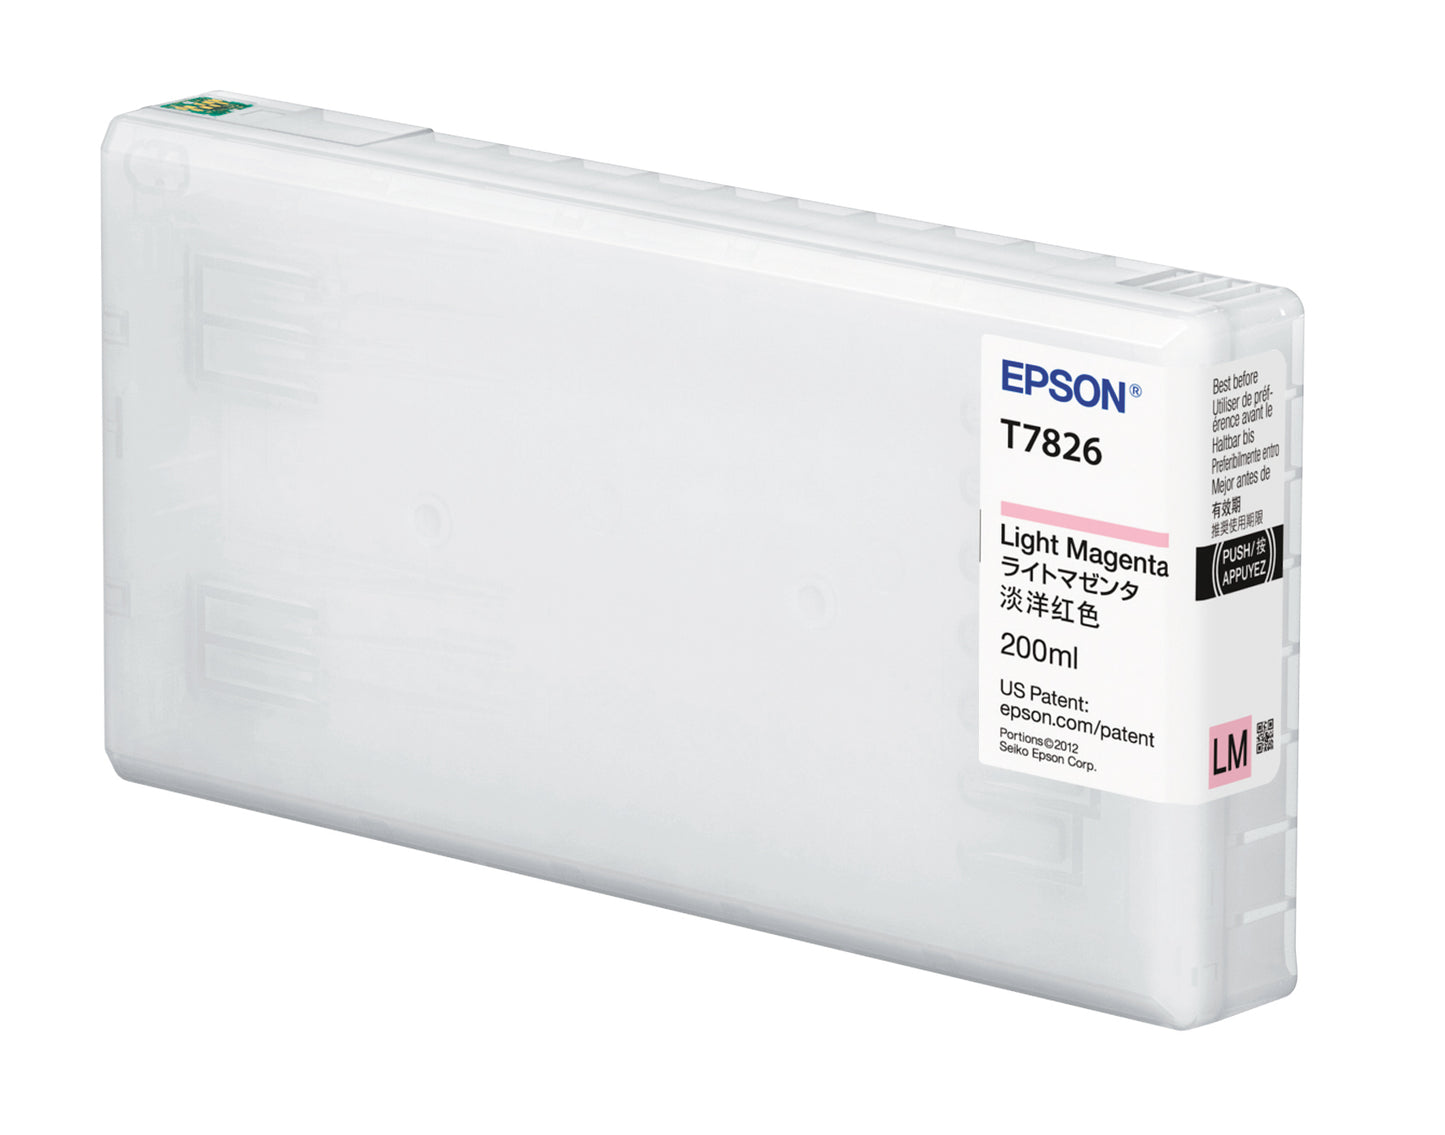 Epson D700 200ml Light Magenta Ink Cartridge